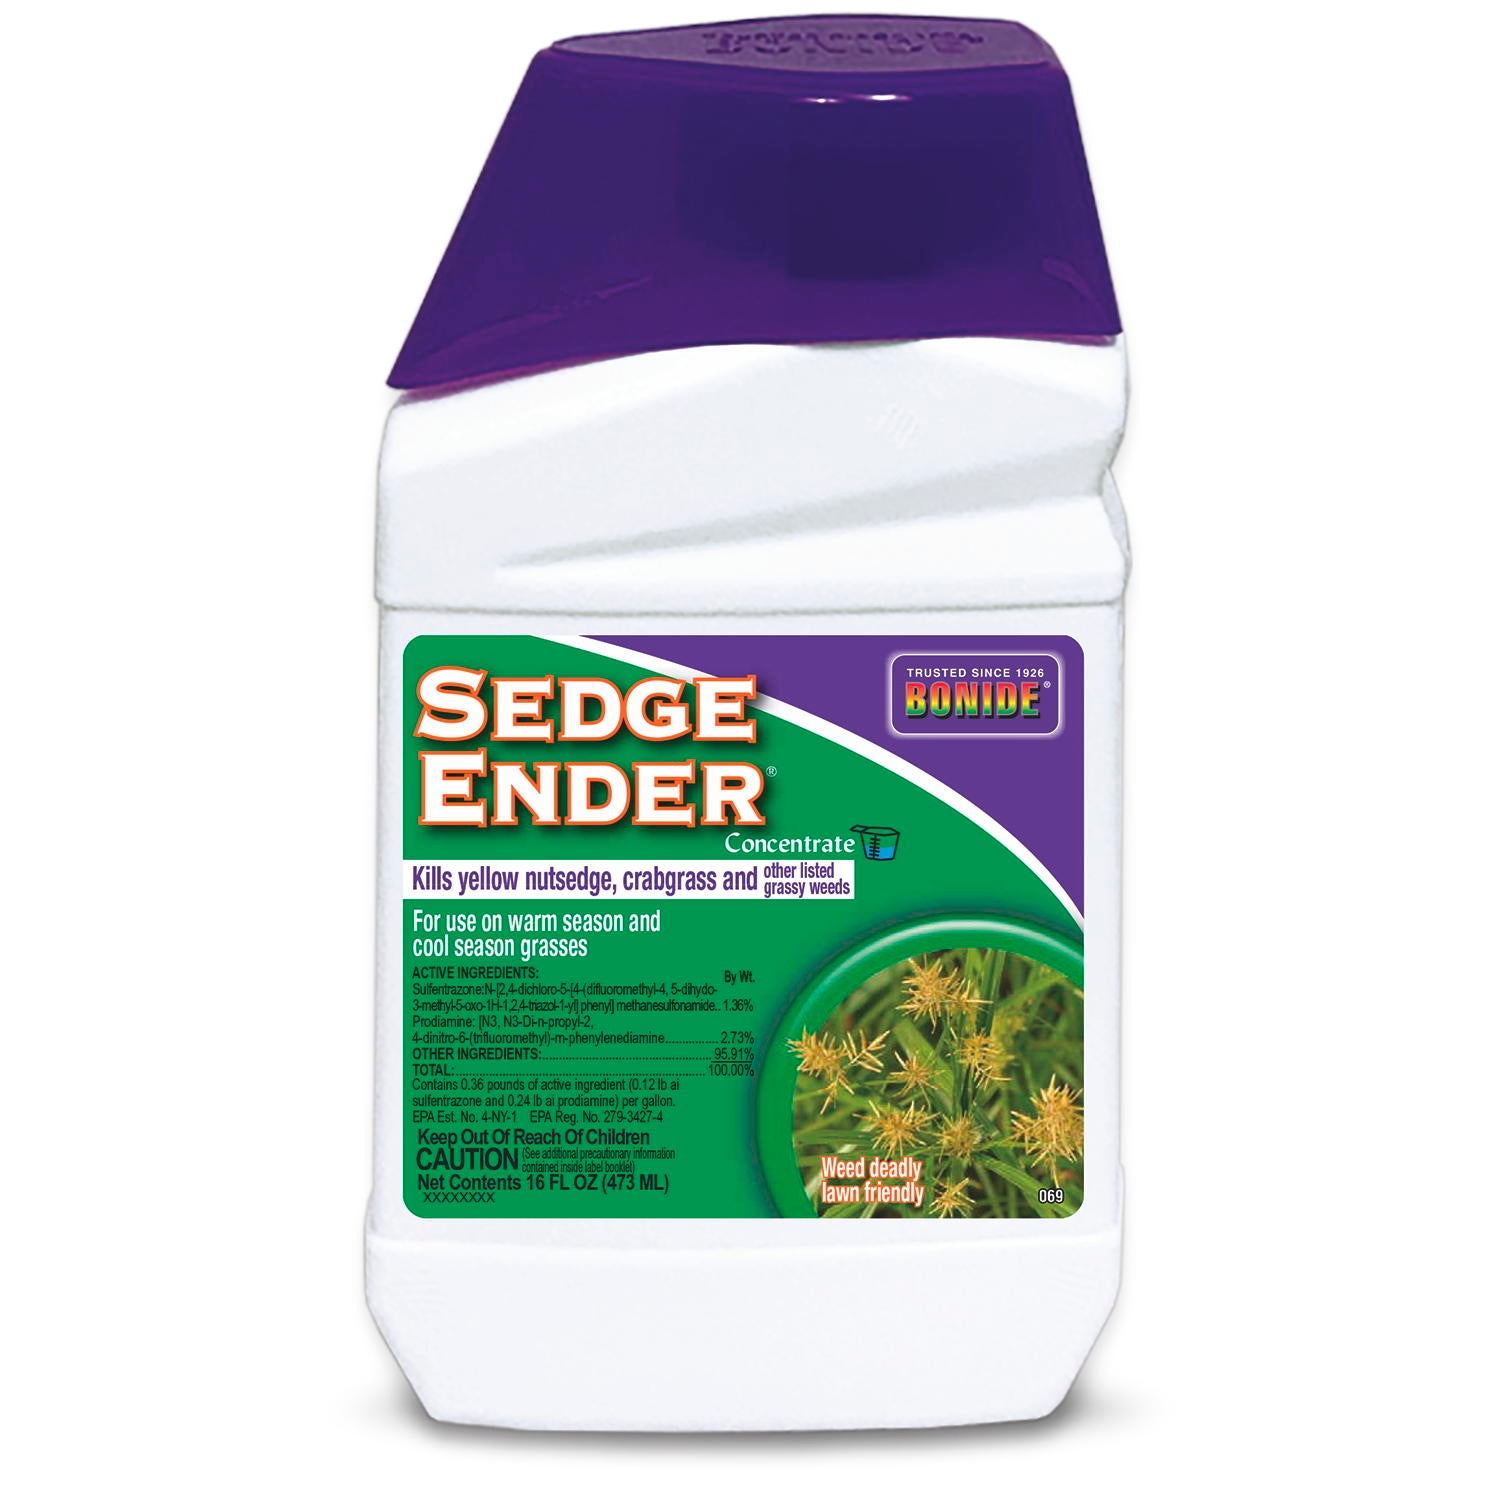 Herbicide focusing on nutsedge, crabgrass and dandelions